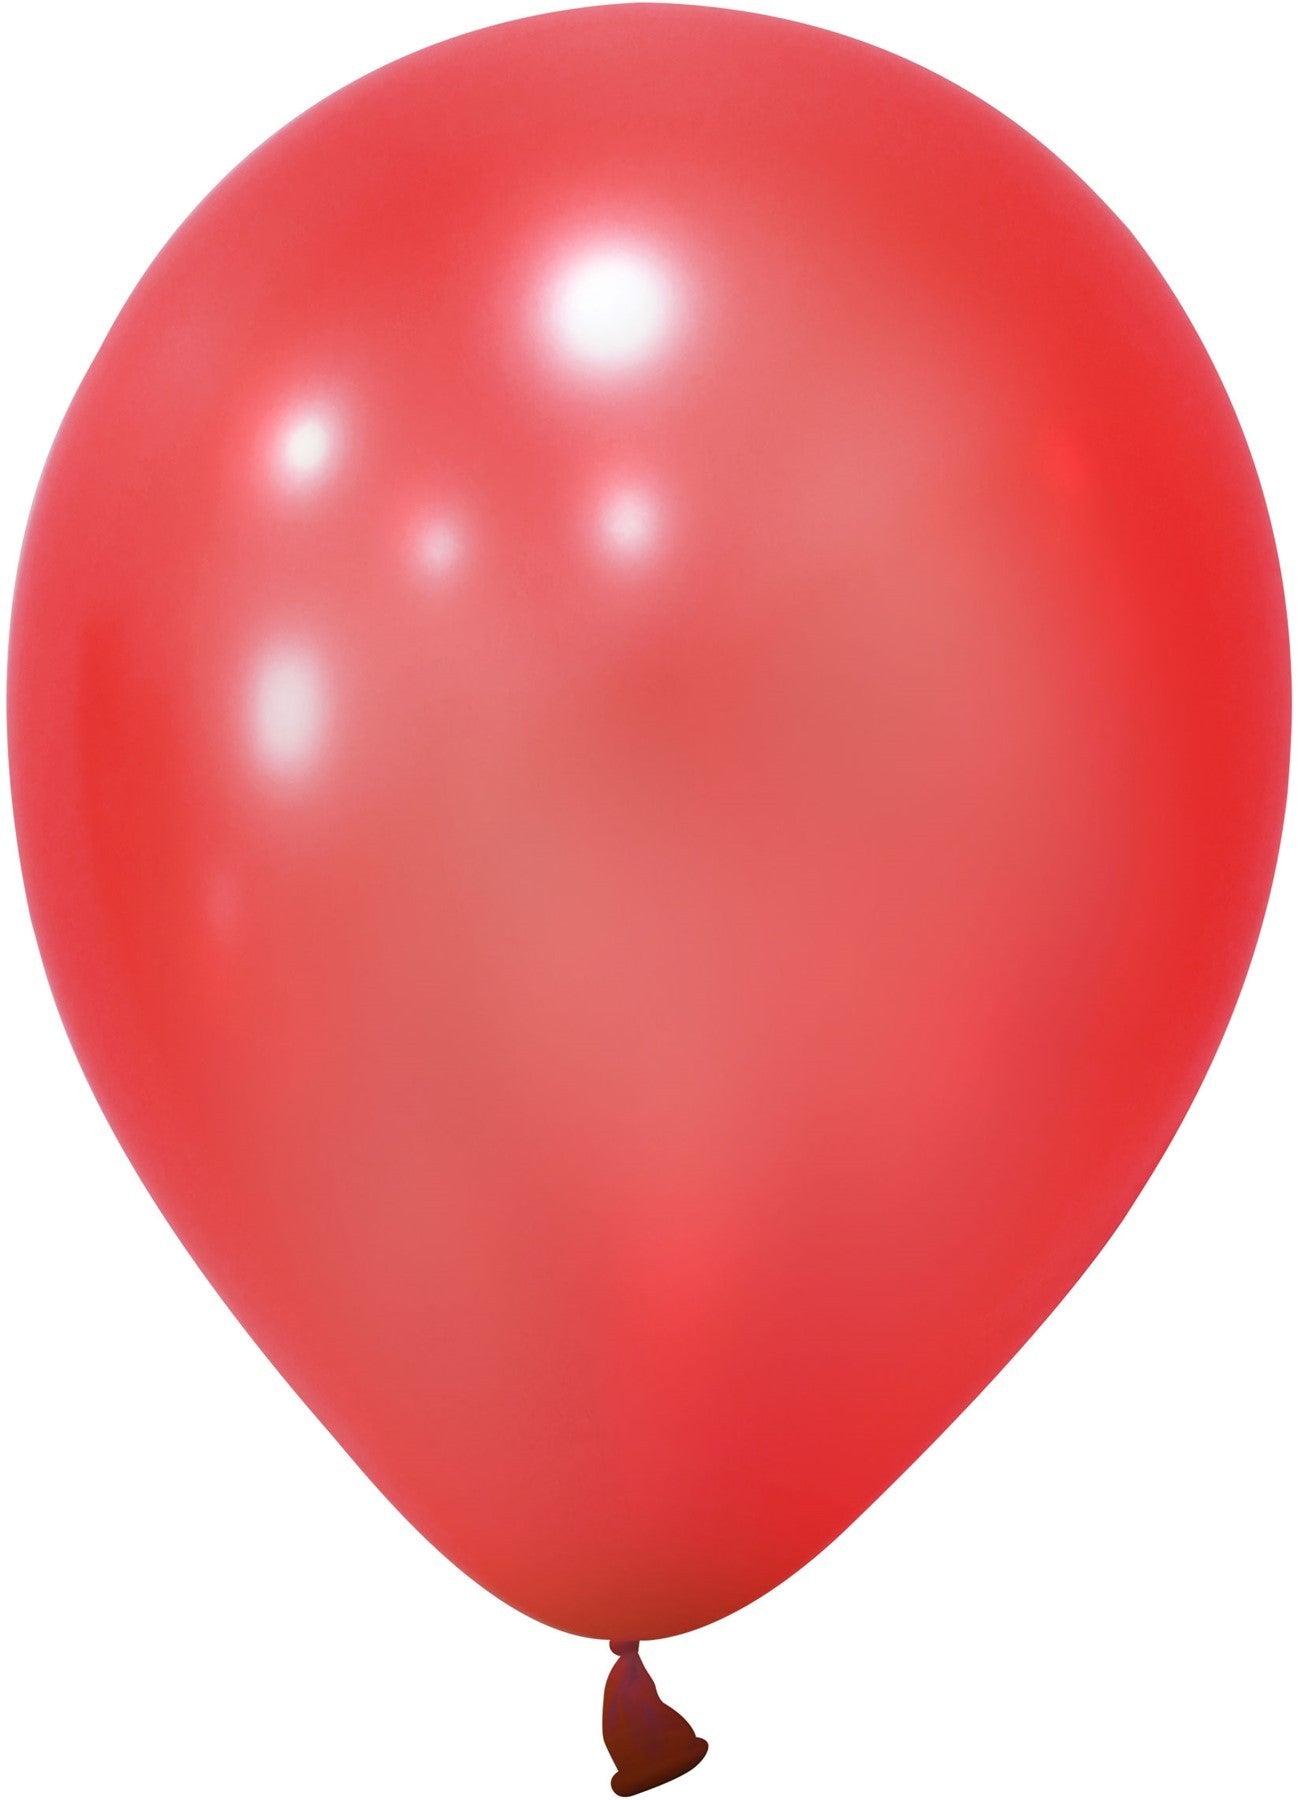 View Red Metallic Latex Balloon 12 inch Pk 100 information